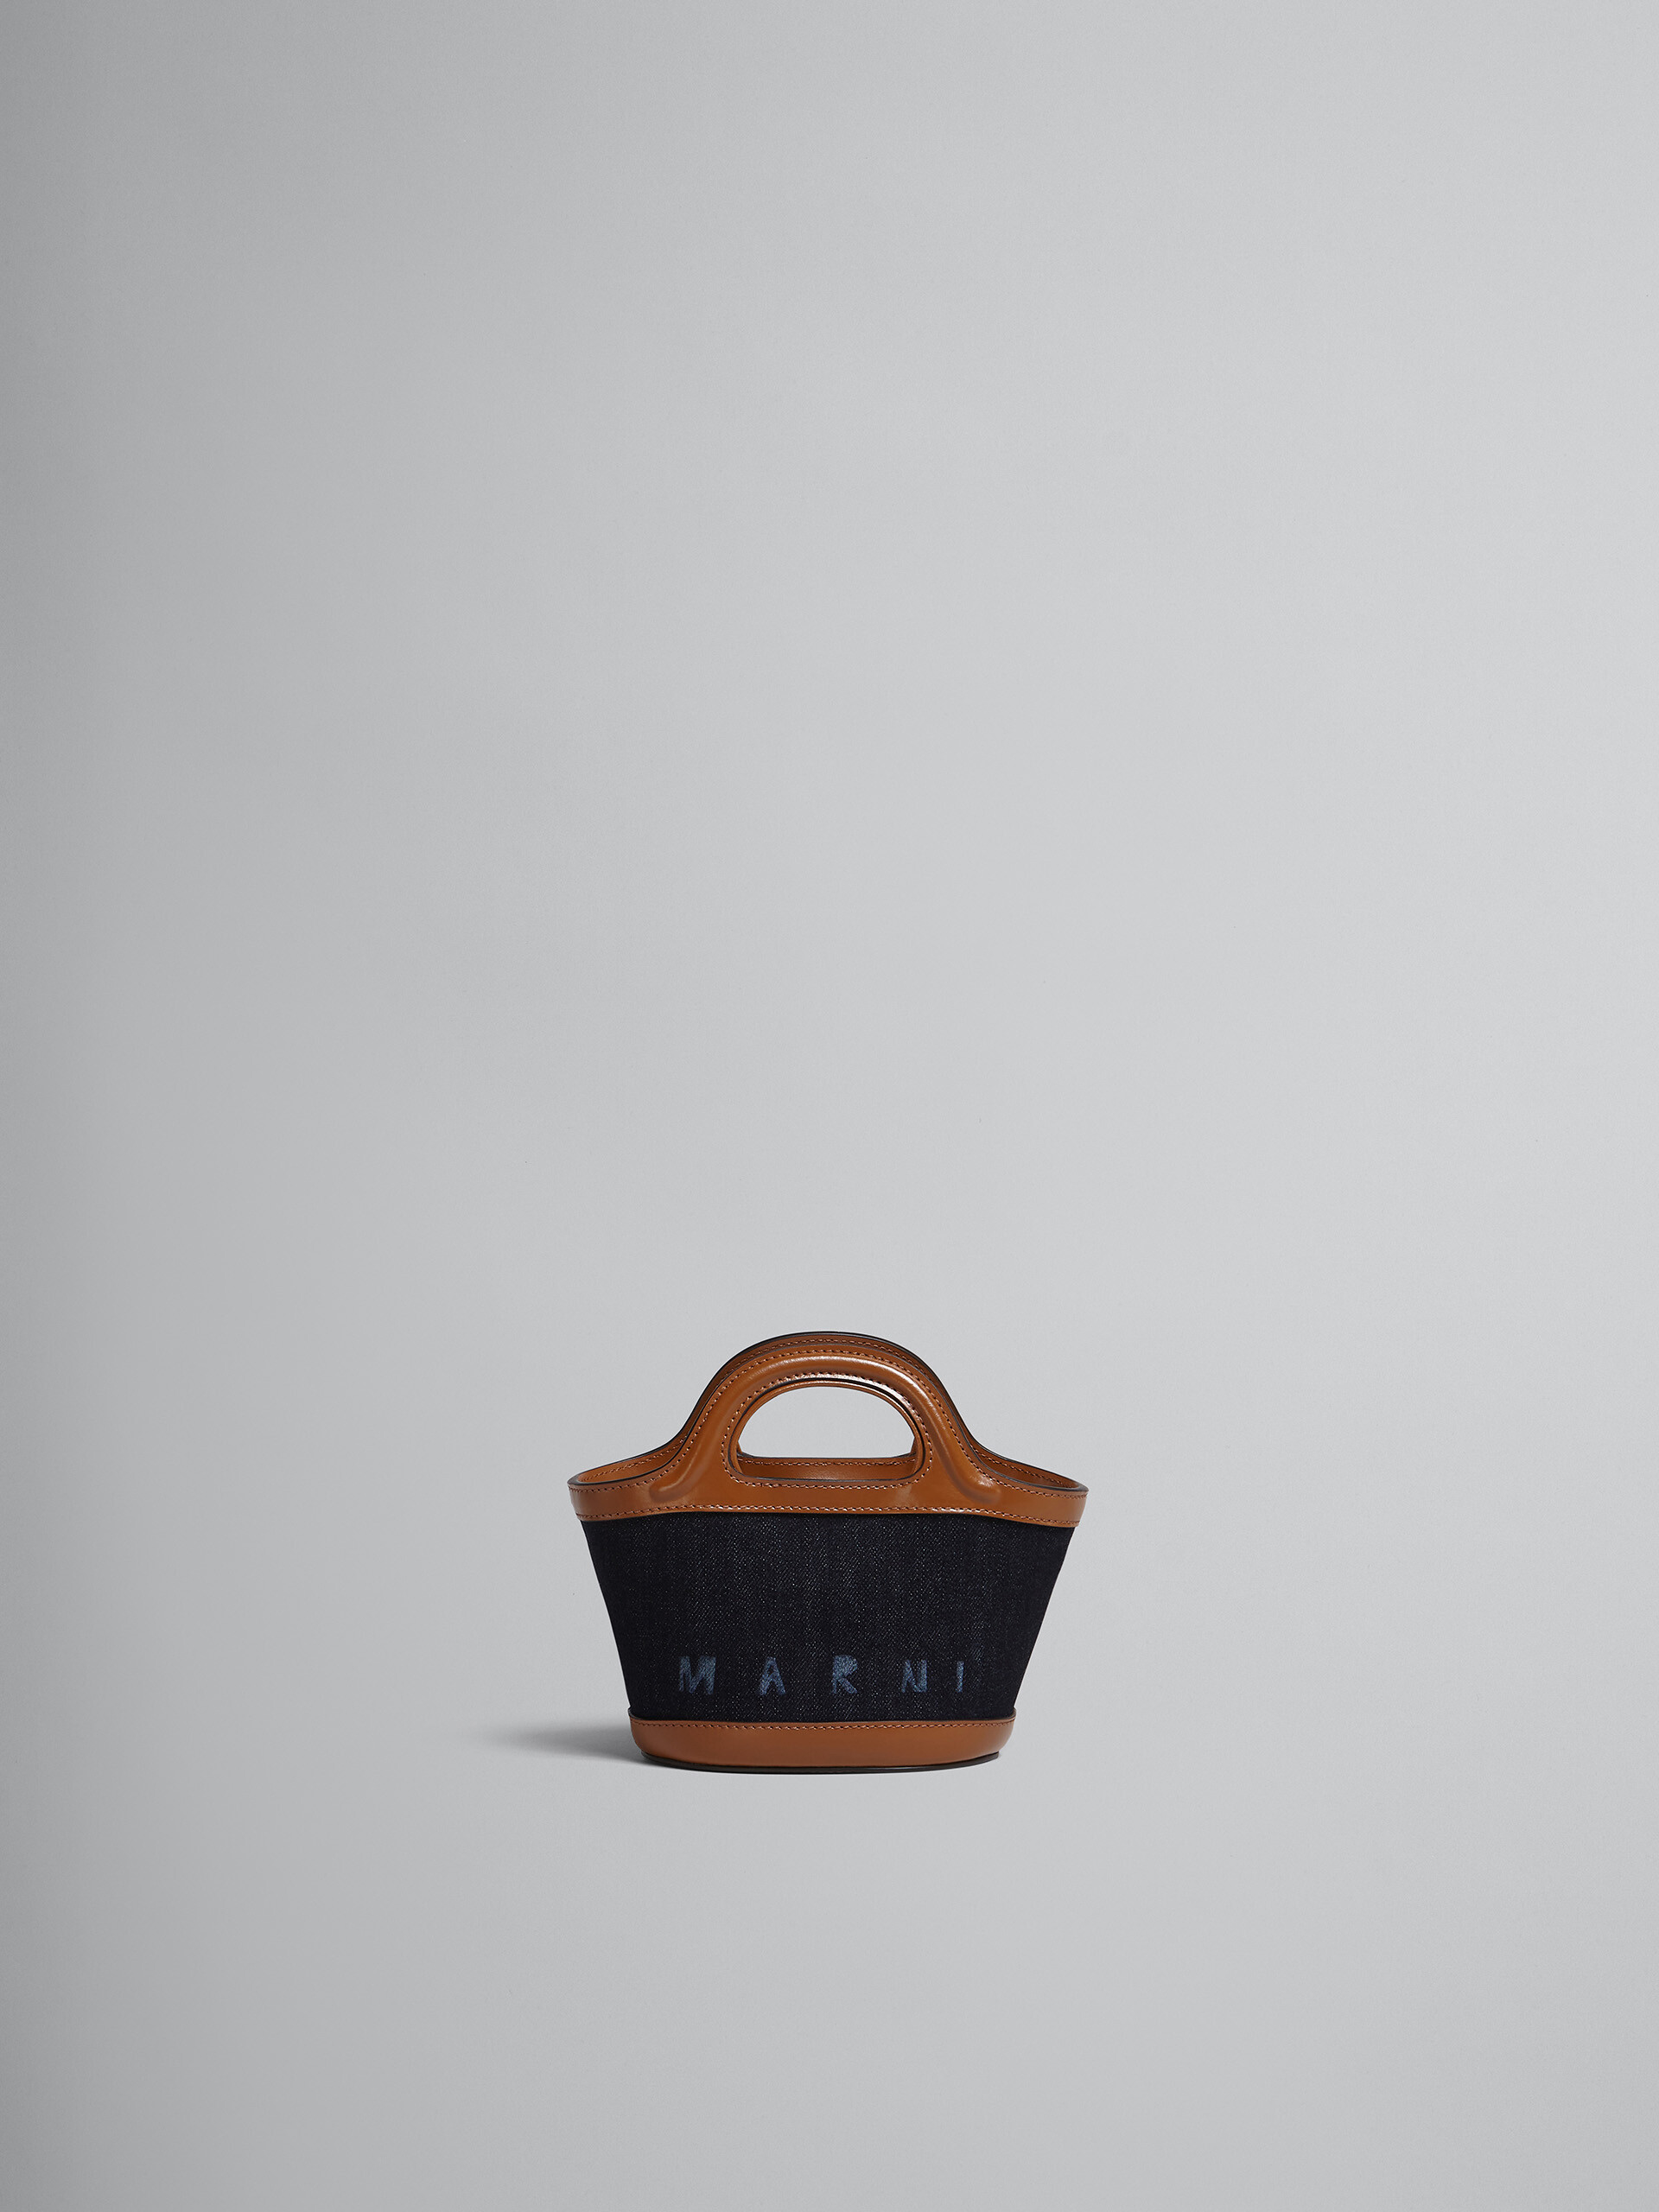 TROPICALIA micro bag in denim and leather - Handbag - Image 1